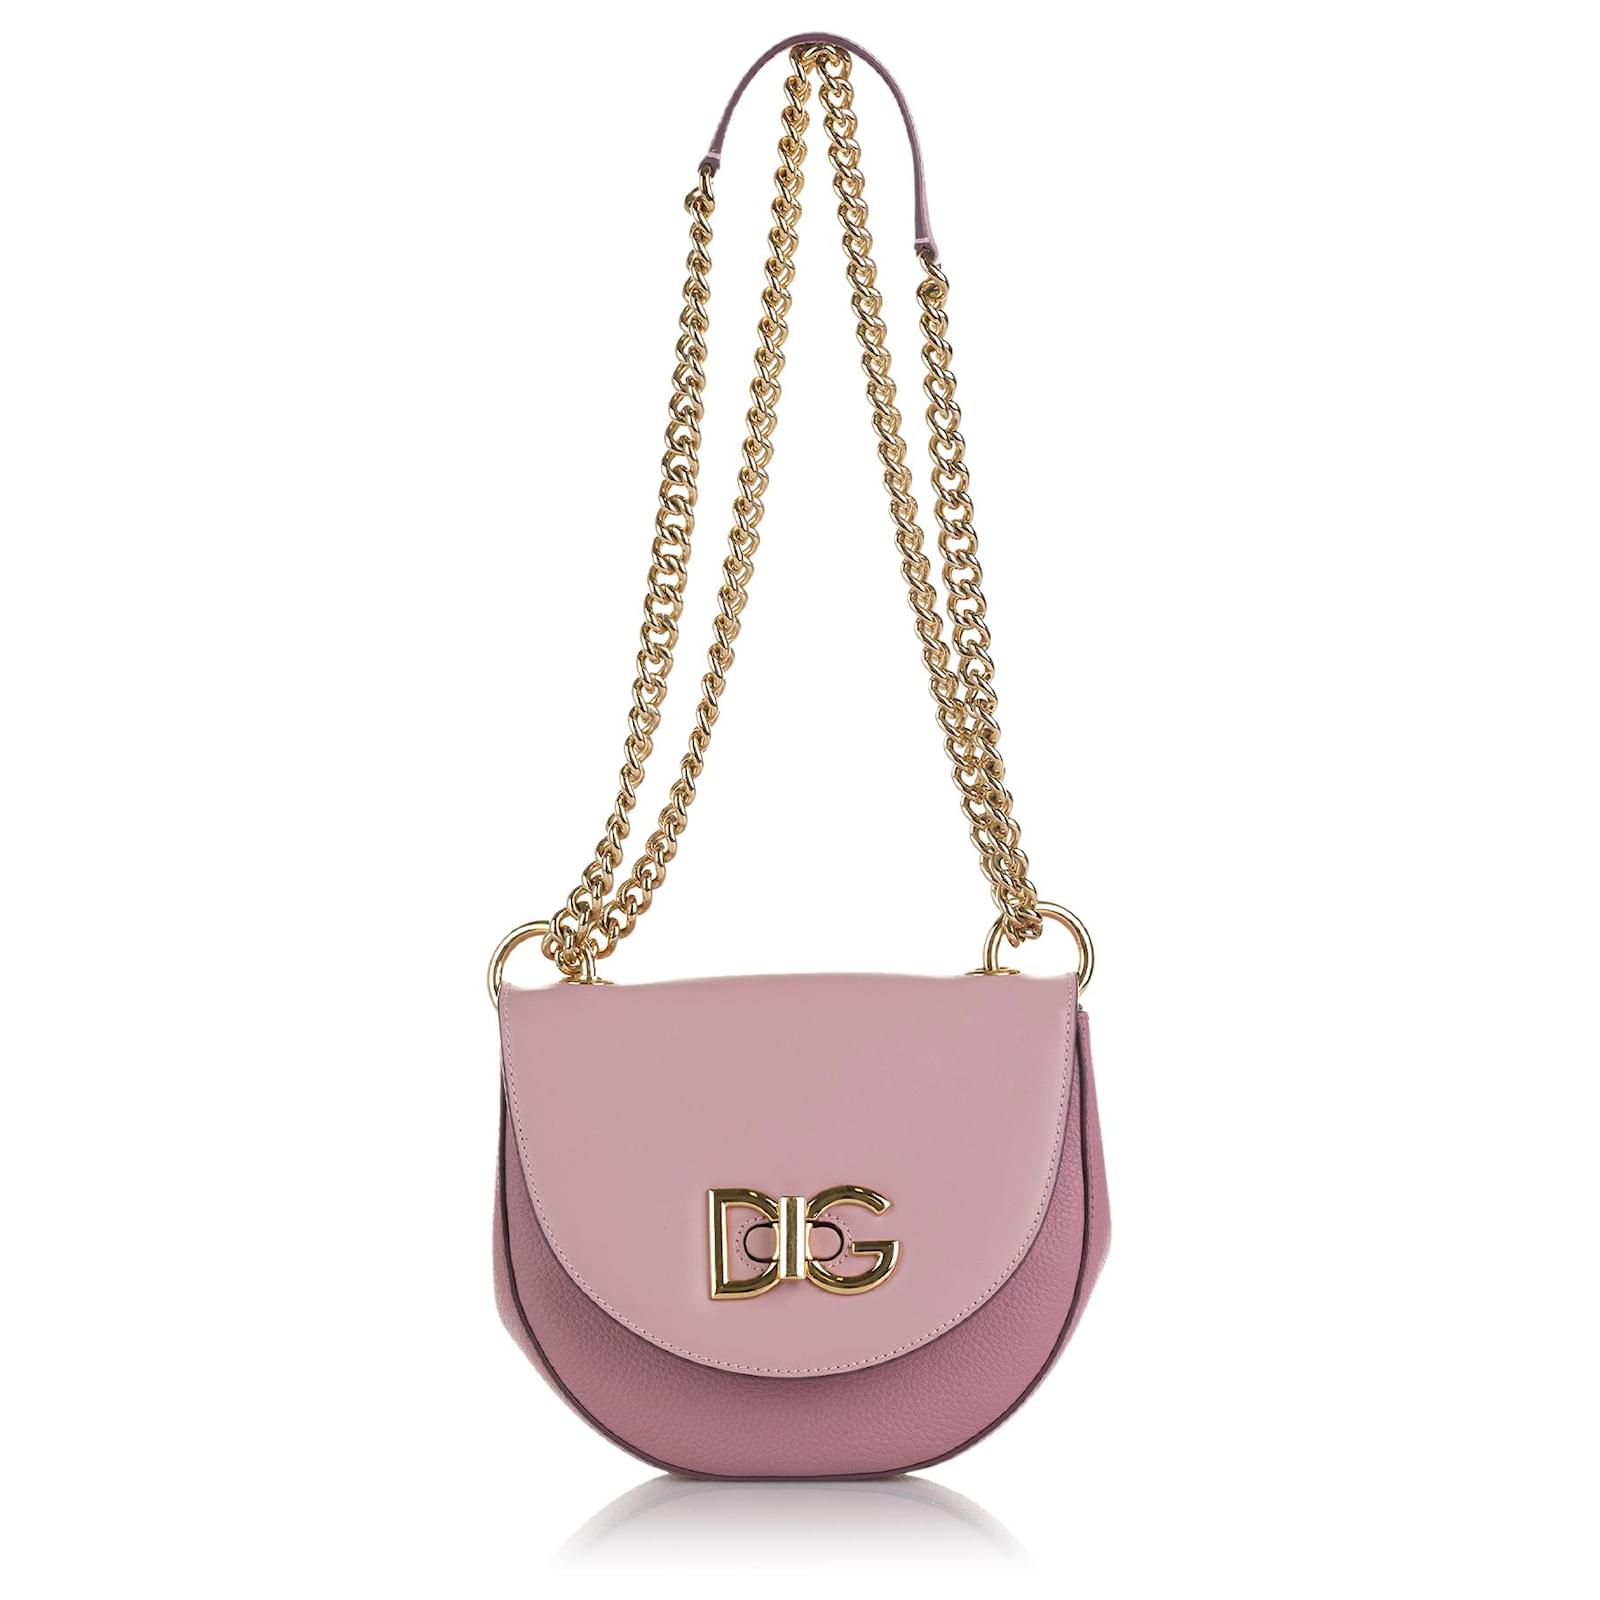 Shop Dolce & Gabbana Bags For Women Online in UAE | Ounass